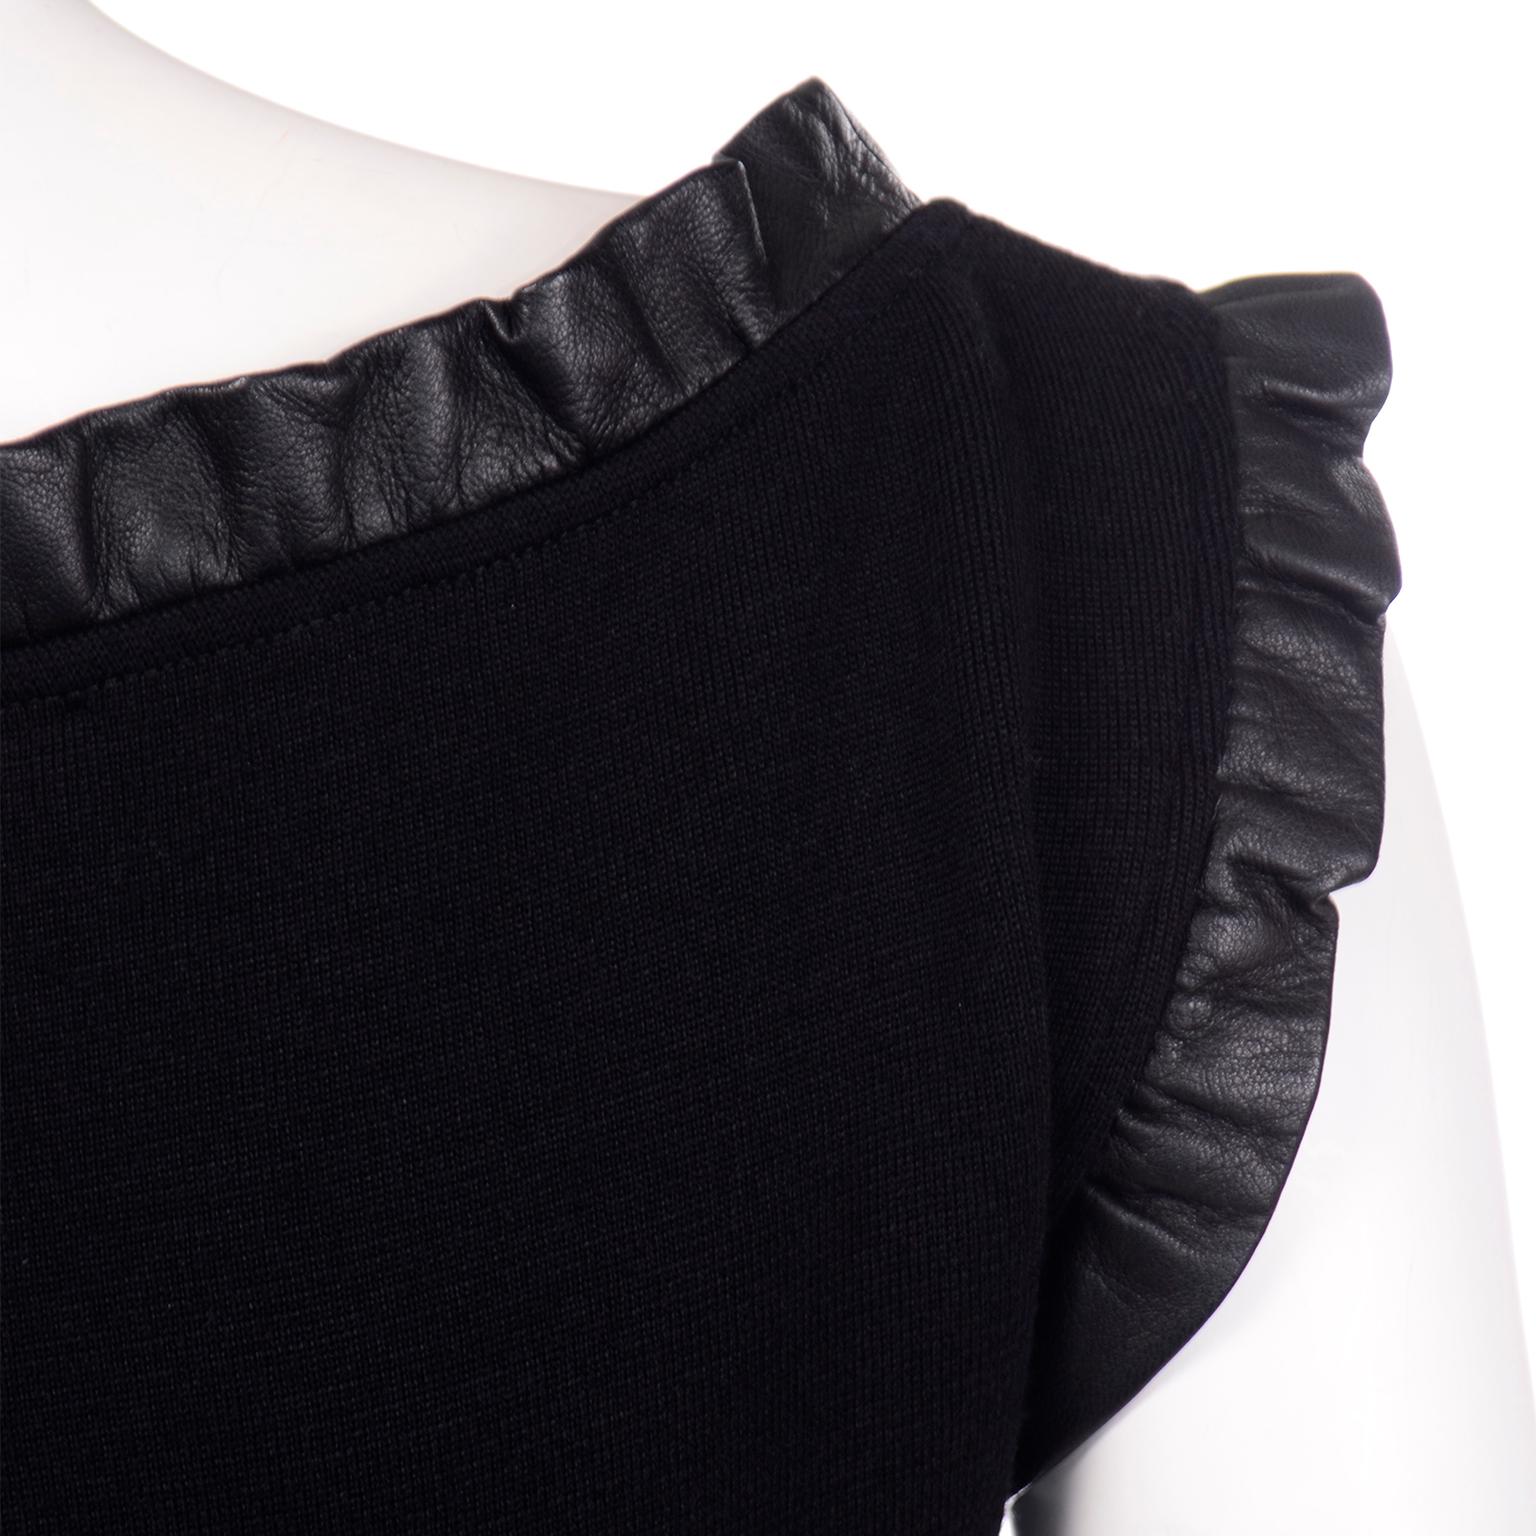 Women's Christian Dior Paris Little Black Dress in Cashmere Silk Blend w Leather Ruffle For Sale